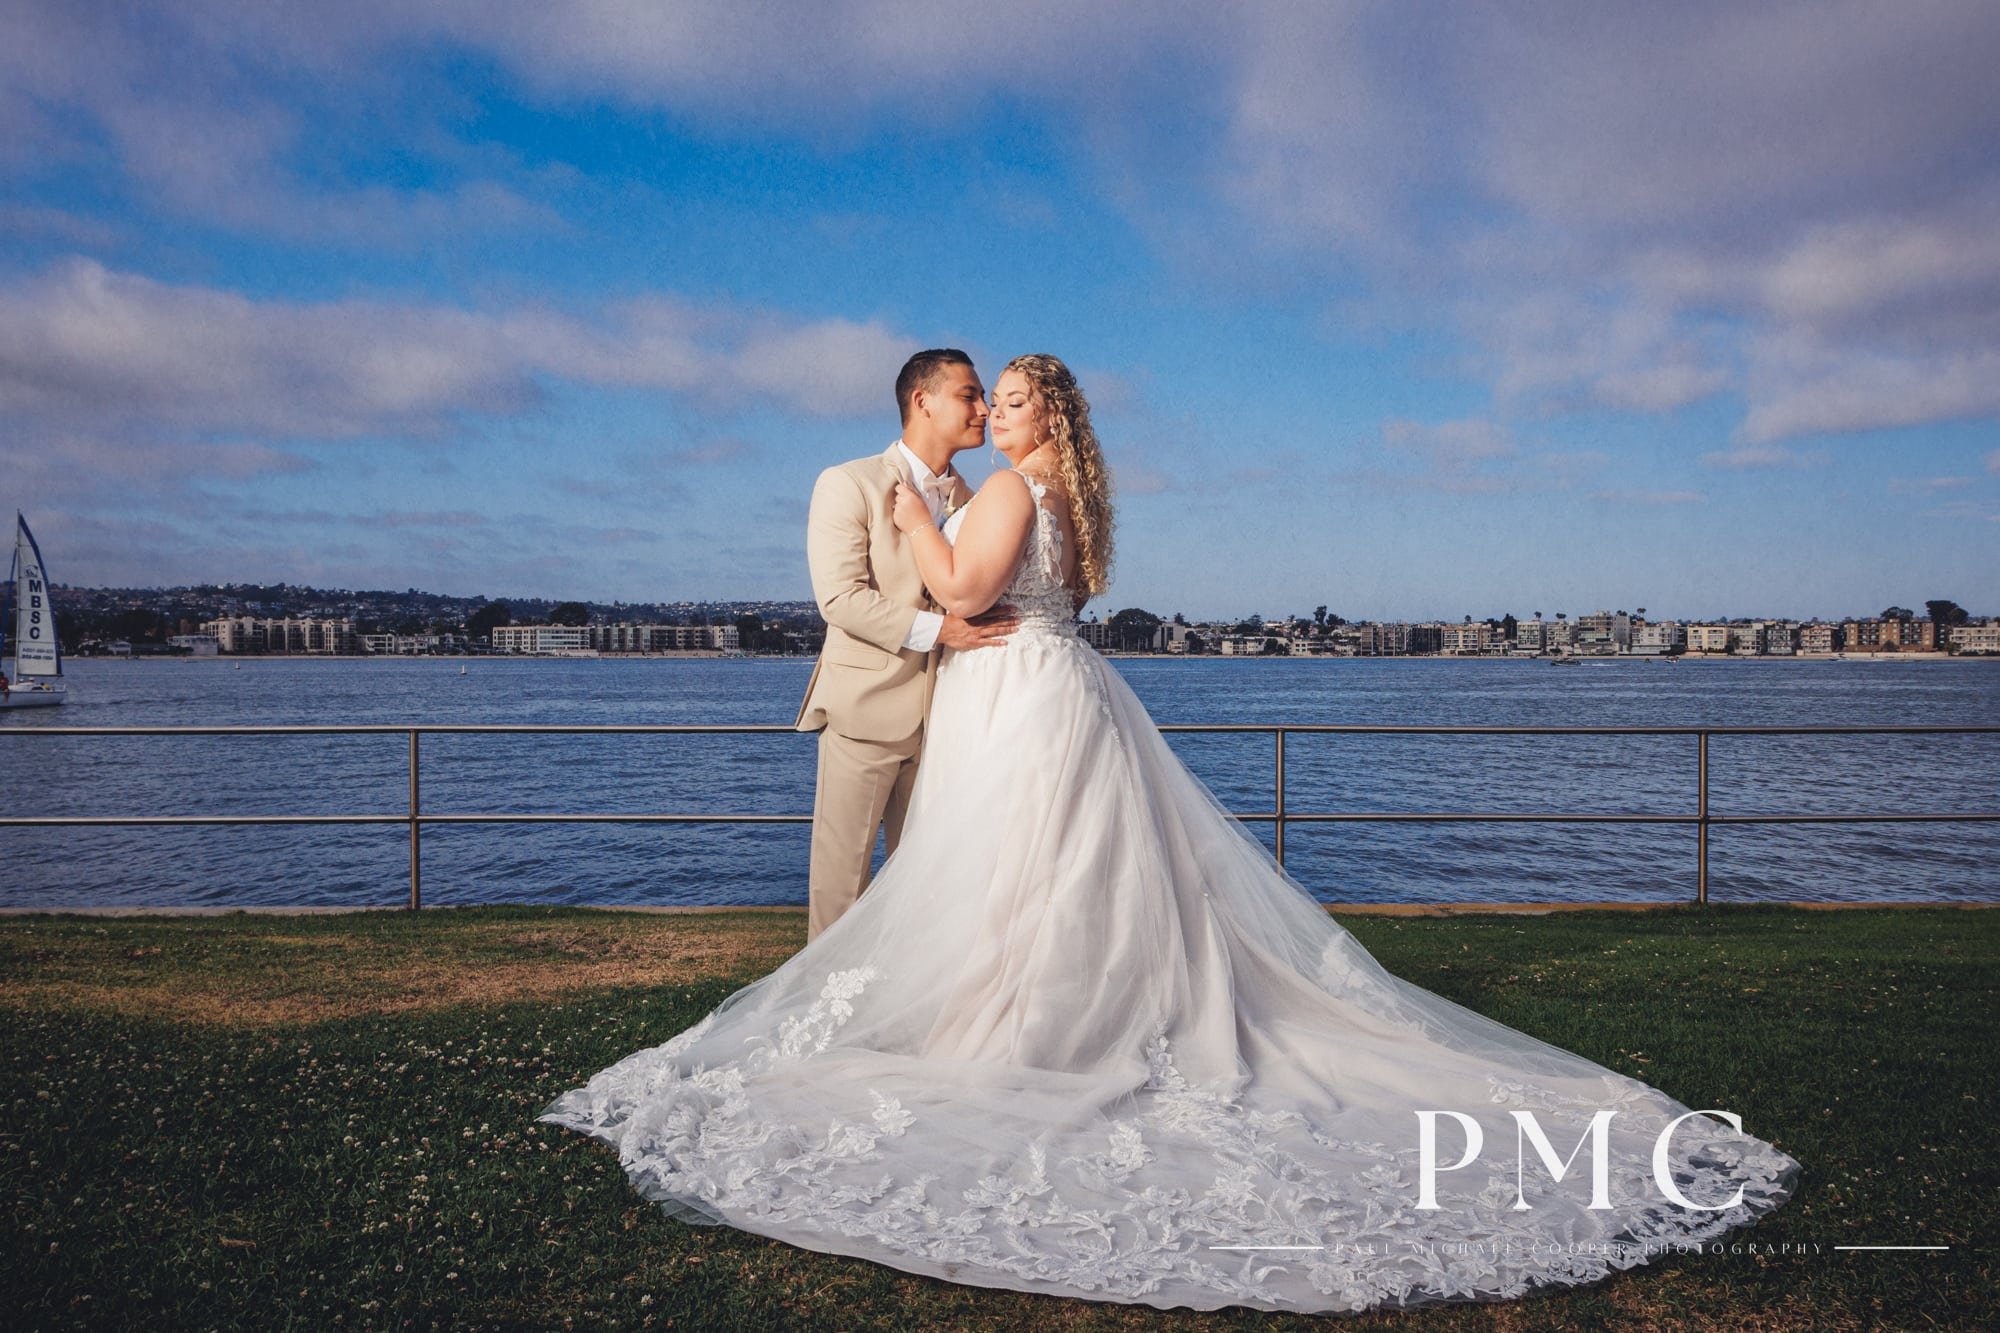 Tower Beach Club - Mission Bay - Best San Diego Wedding Photographer-7.jpg